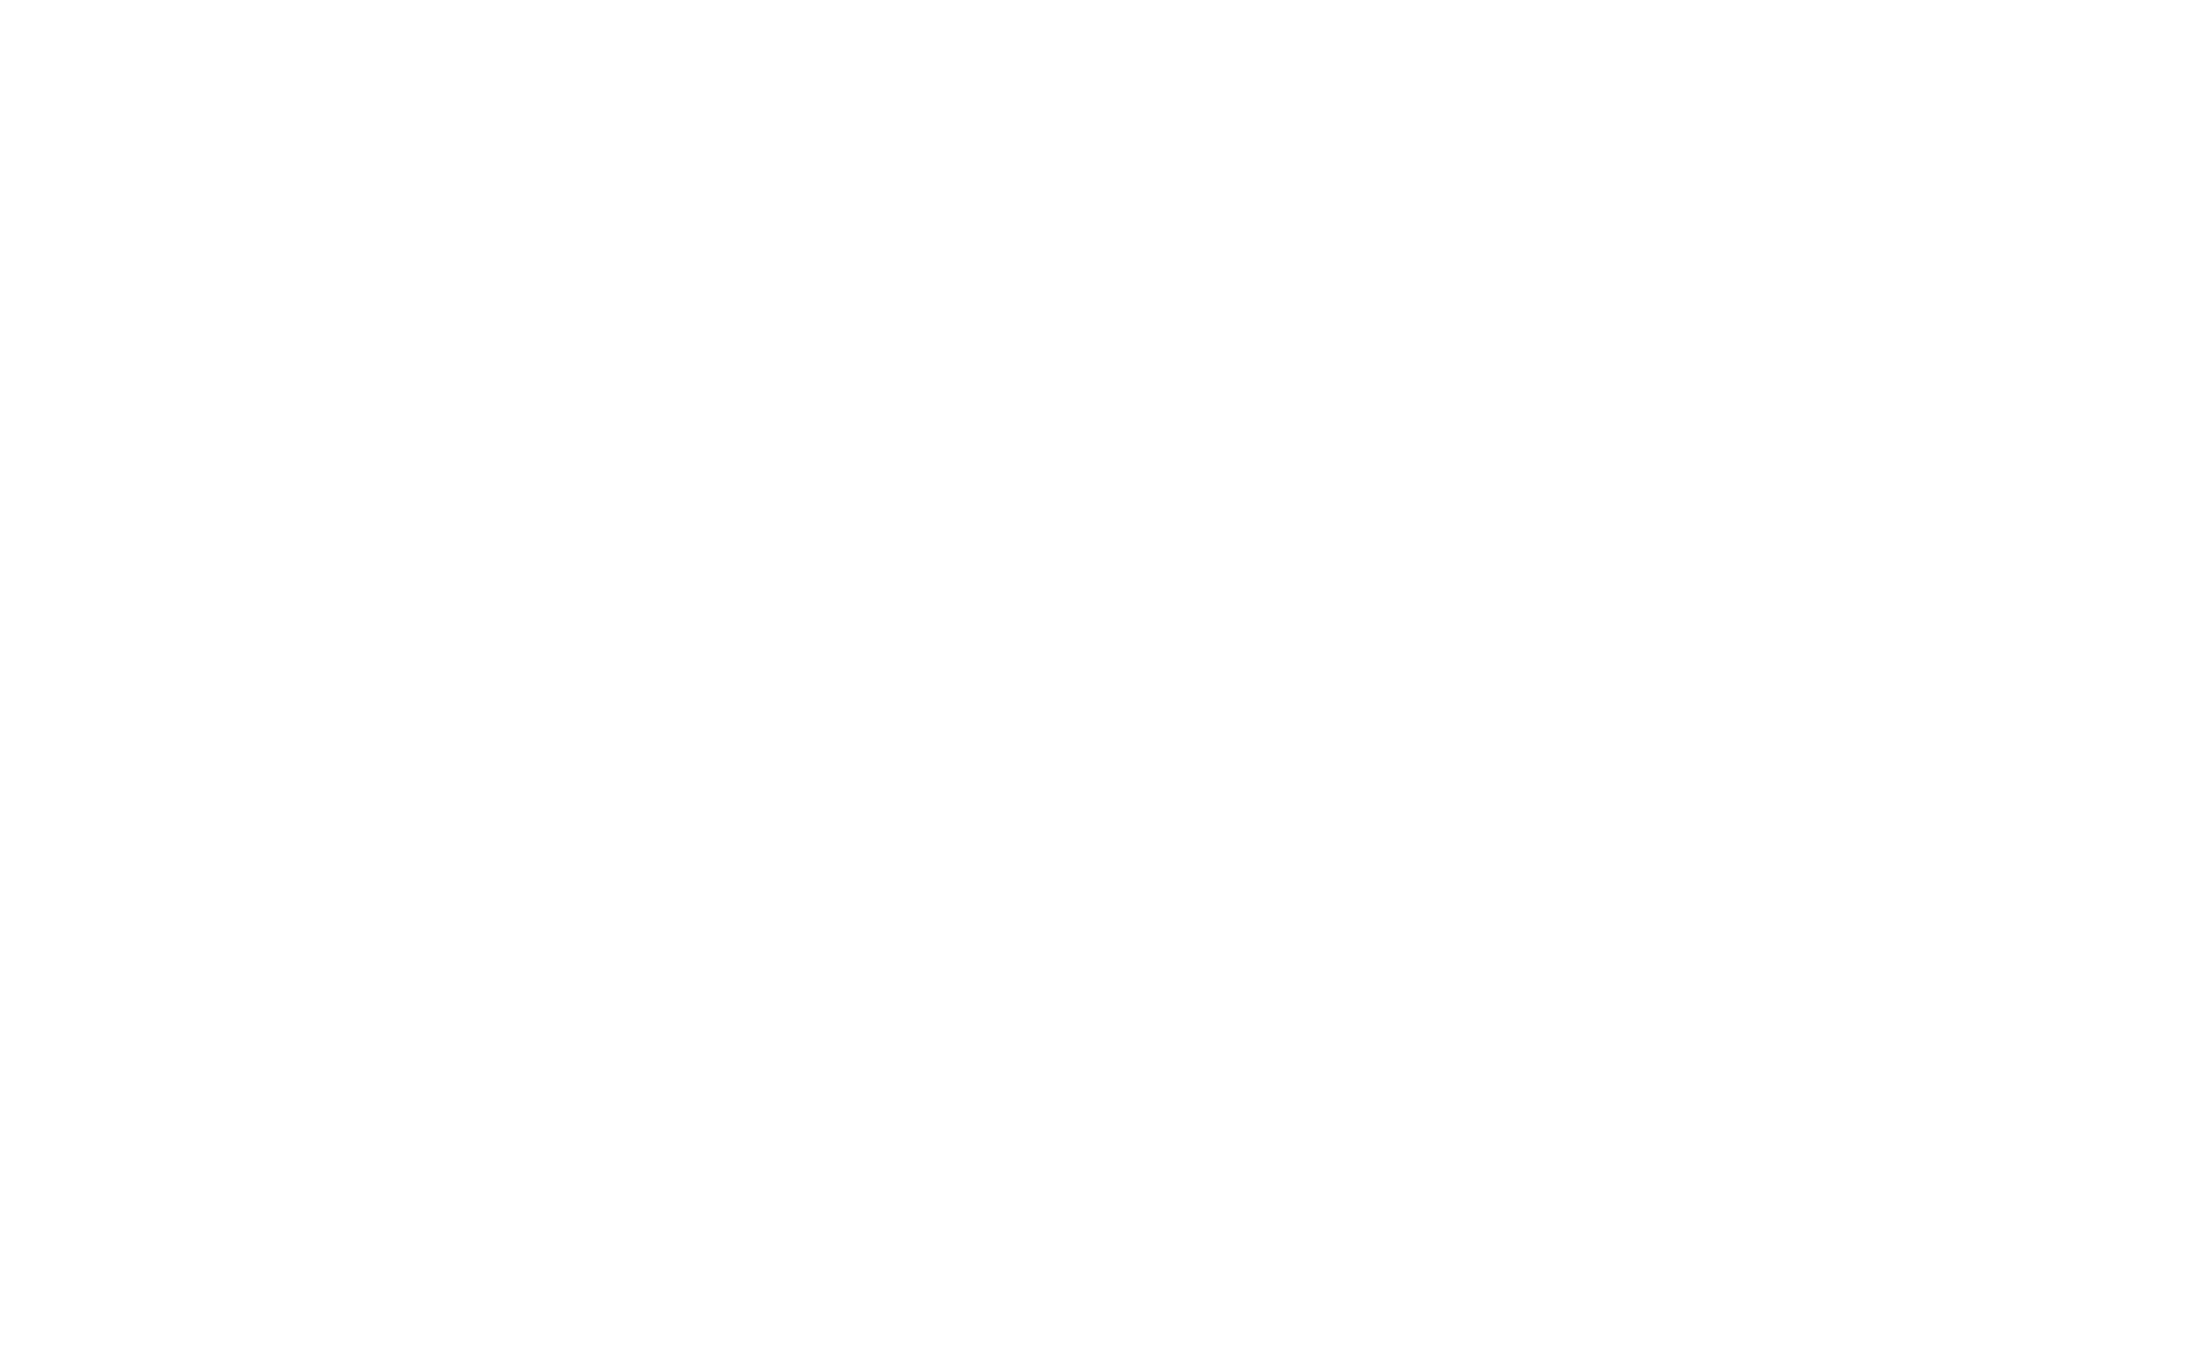 AnnDLeon